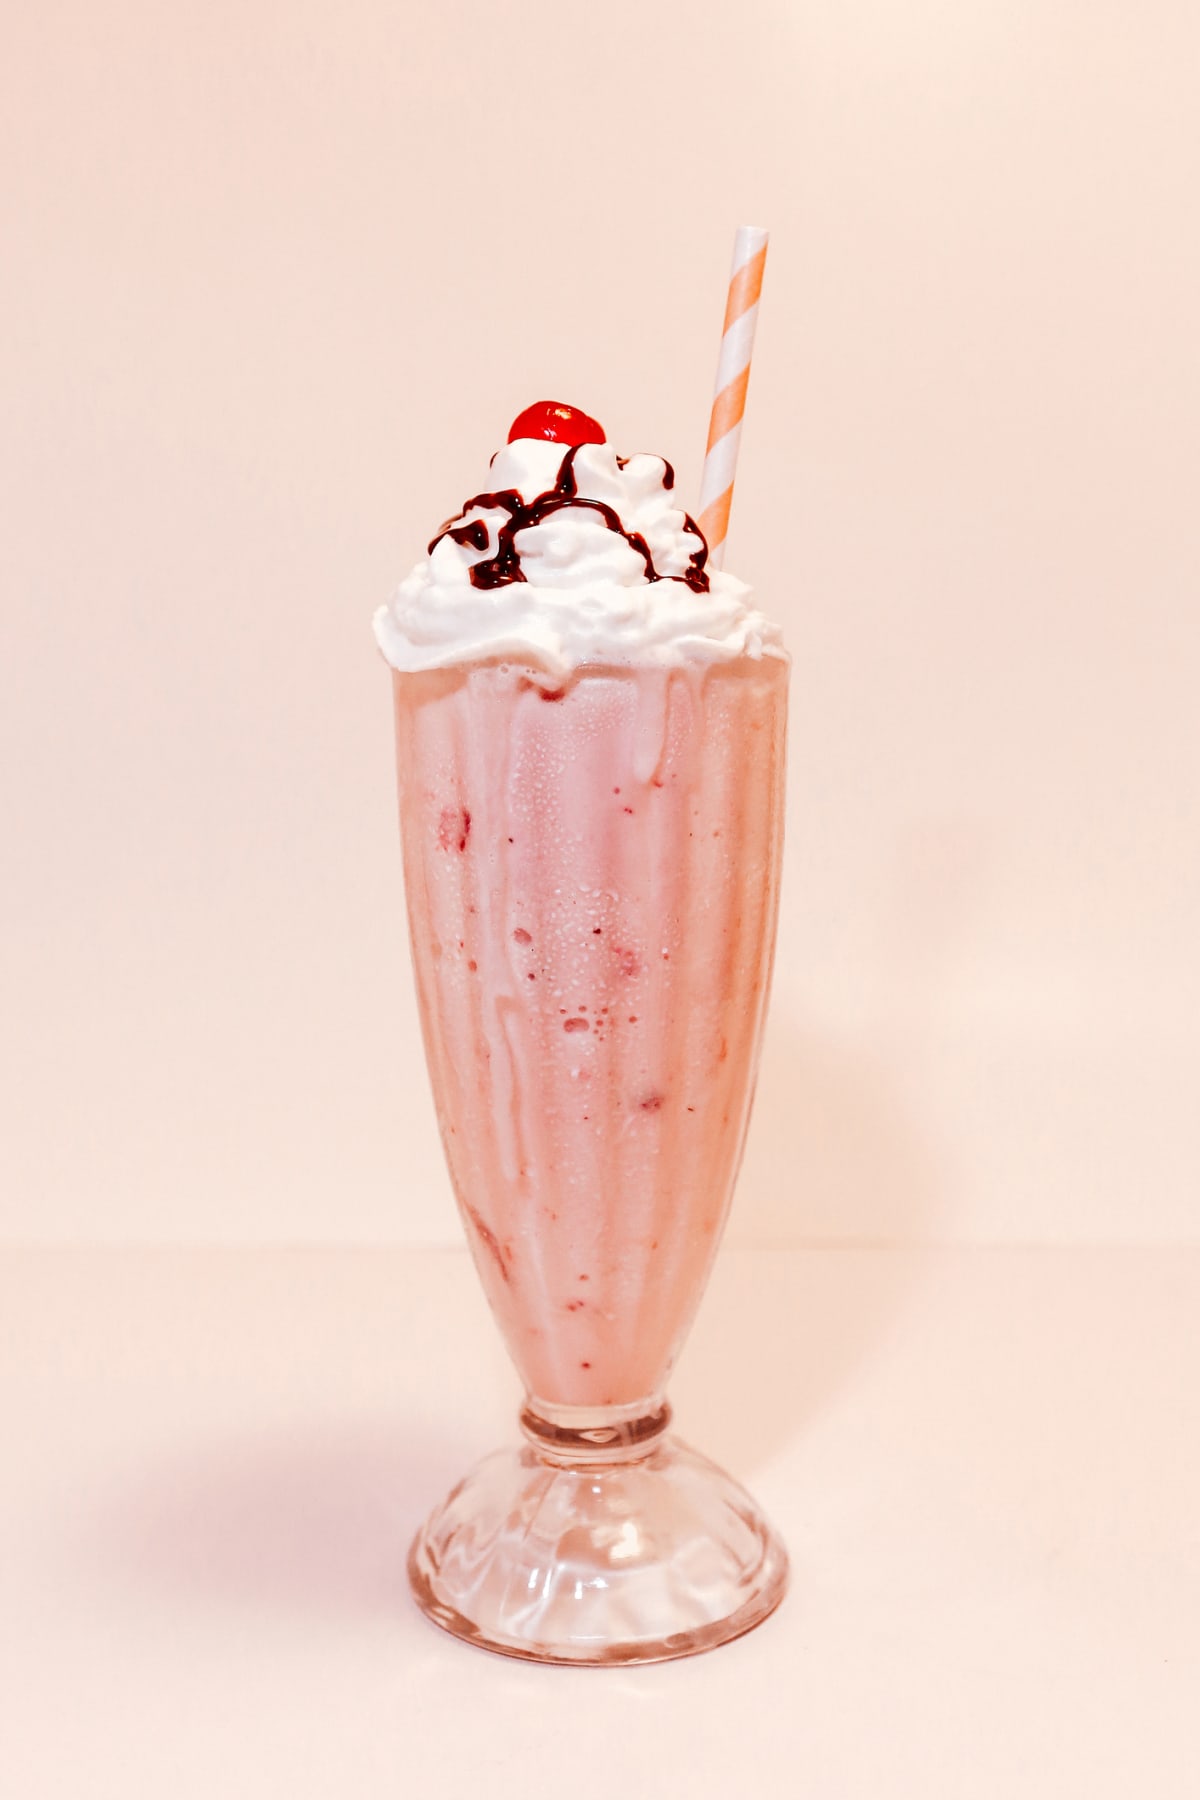 Strawberry milkshake containing strawberry ice cream. No people. 

Indulgence, unhealthy eating, sugar, sugary, dessert, retro image has copy space, room for text.